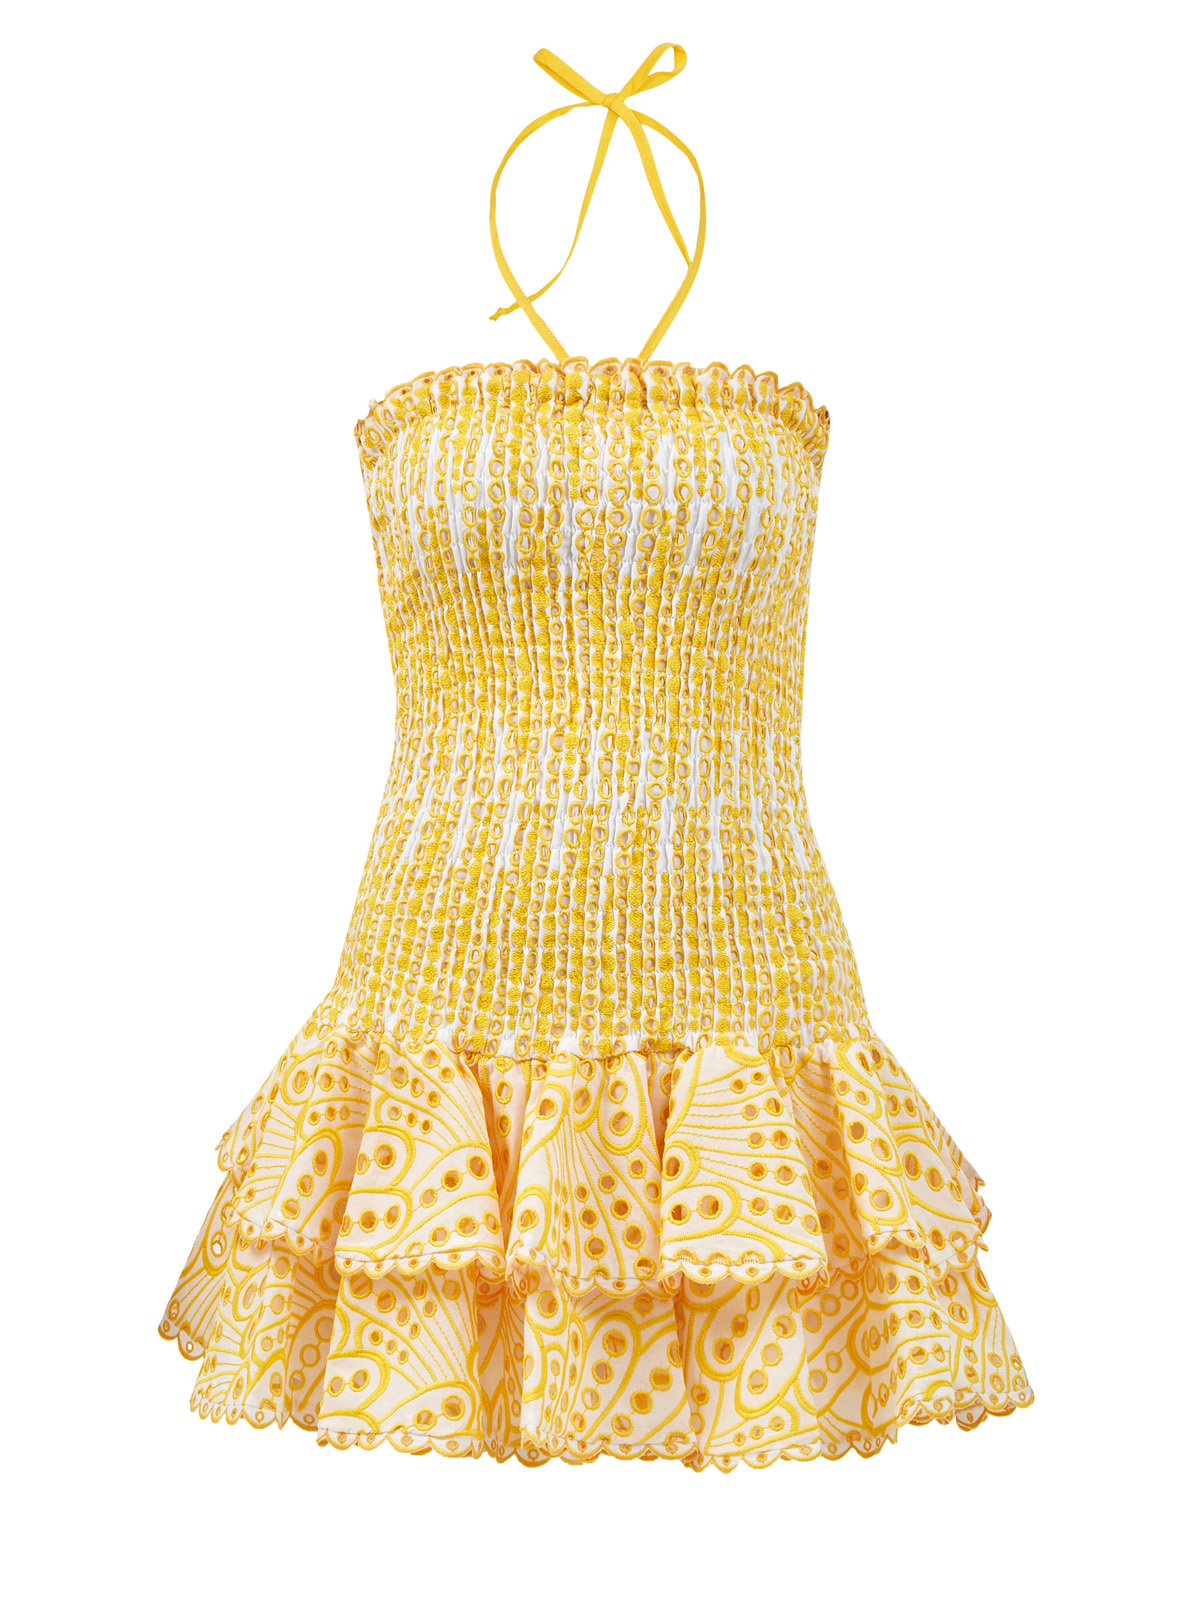 Мини-платье Megan из вышитого хлопка broderie anglaise CHARO RUIZ IBIZA, цвет желтый, размер M;L;S - фото 1